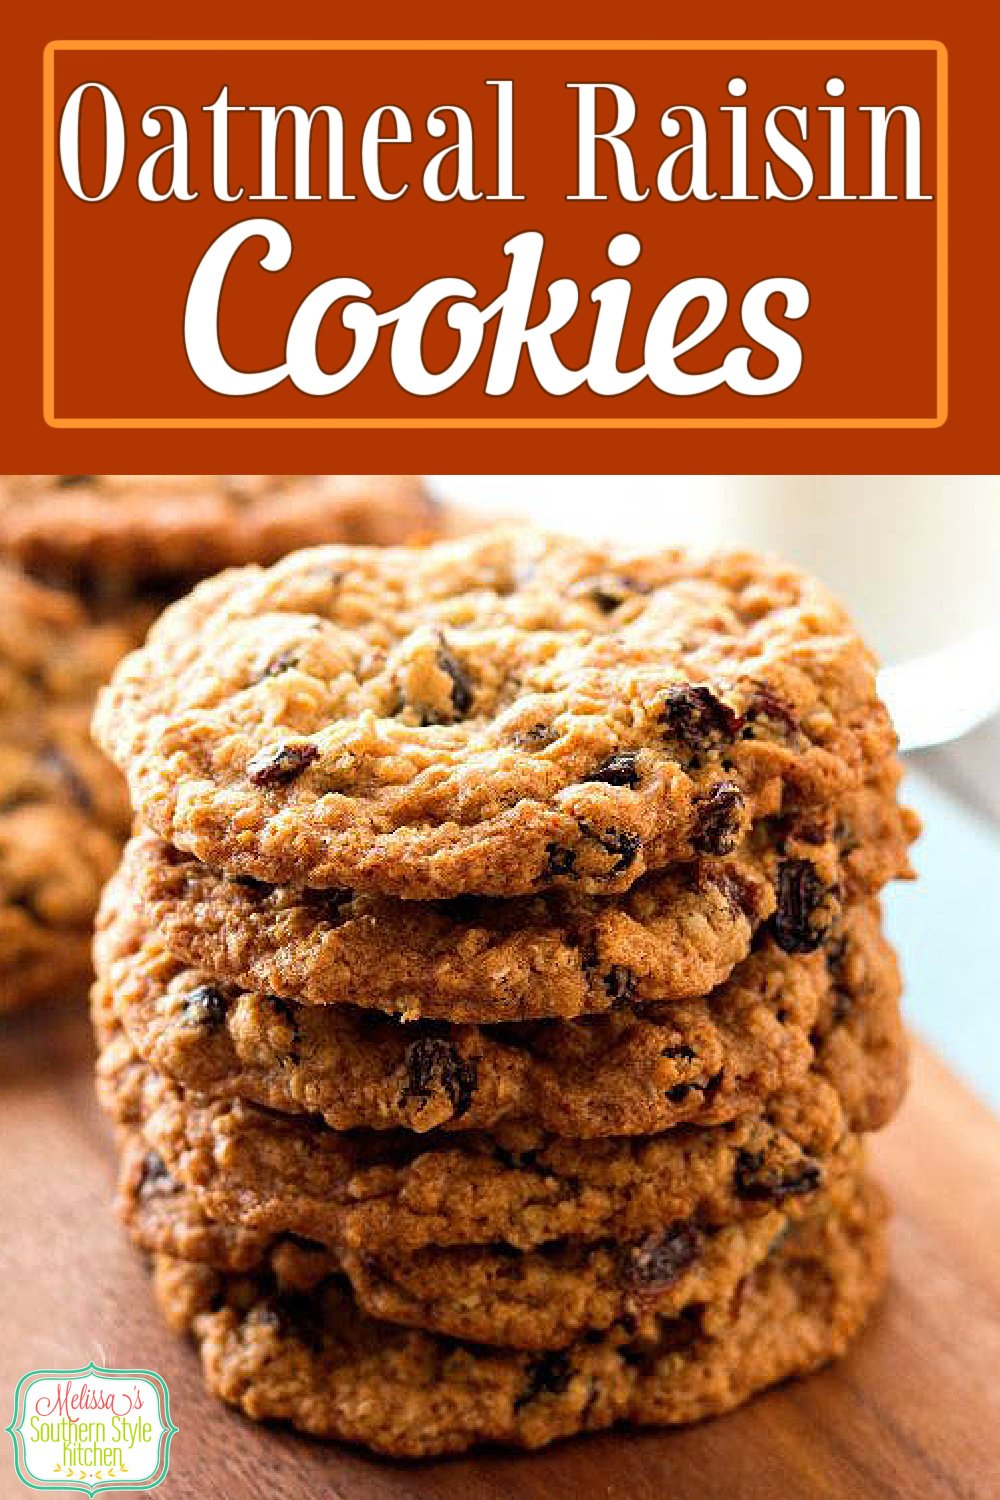 Classic chewy Oatmeal Raisin Cookies #oatmealraisincookies #cookies #oatmeal #cookierecipes #desserts #dessertfoodrecipes #recipes #food #southernrecipes #southernfood #holidaybaking via @melissasssk